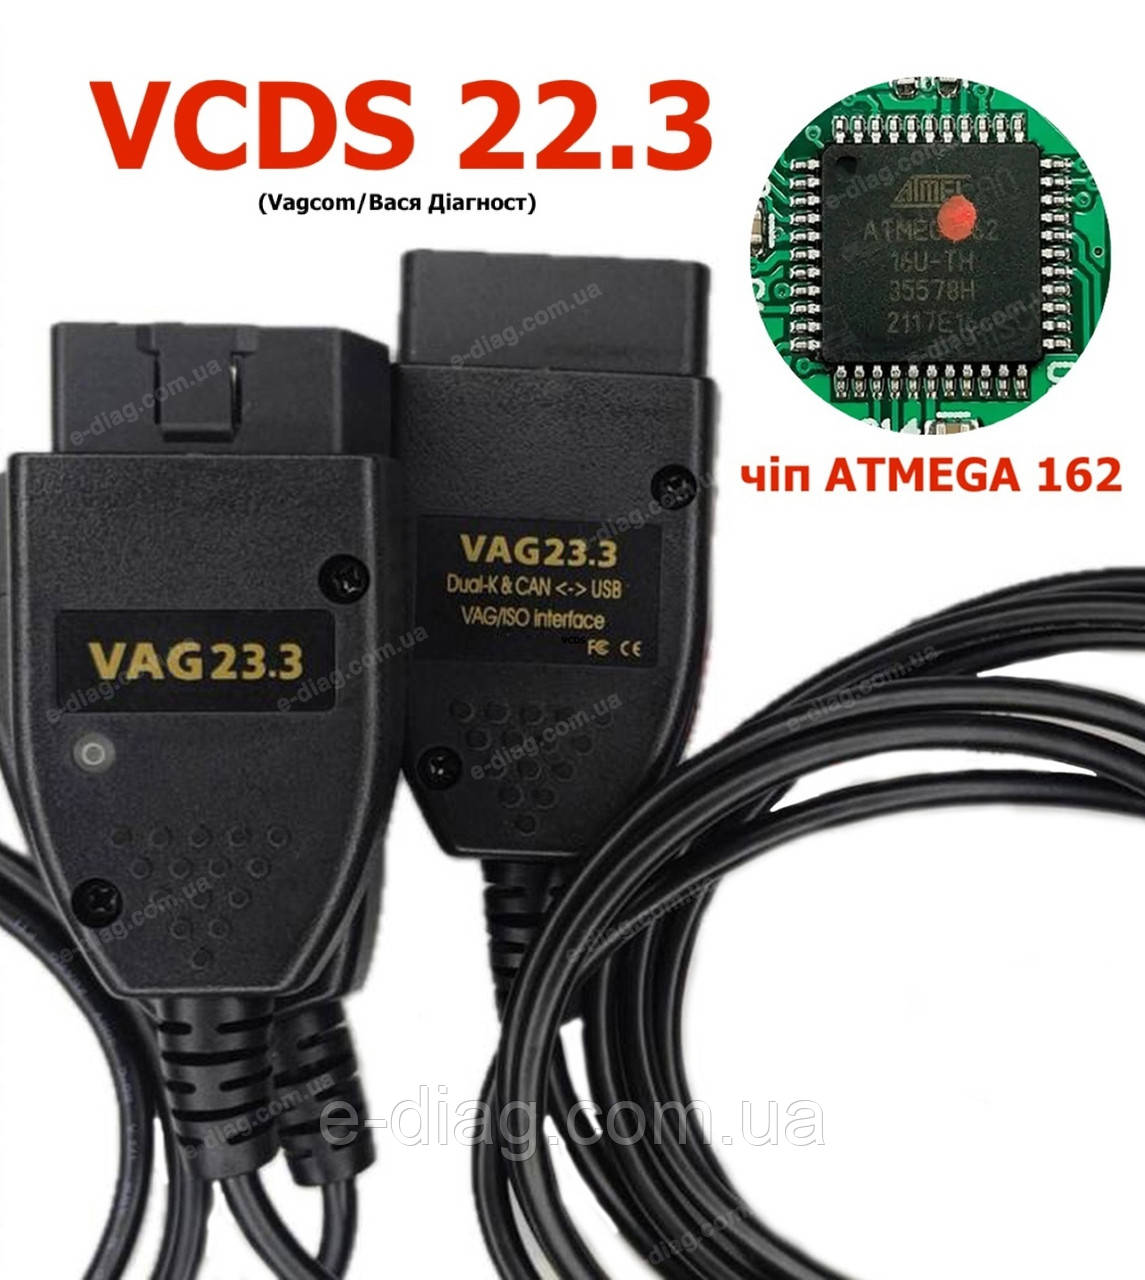 Сканер VCDS 23.3-22.3 Vag Com для діагностики VAG. Оновлена версія!